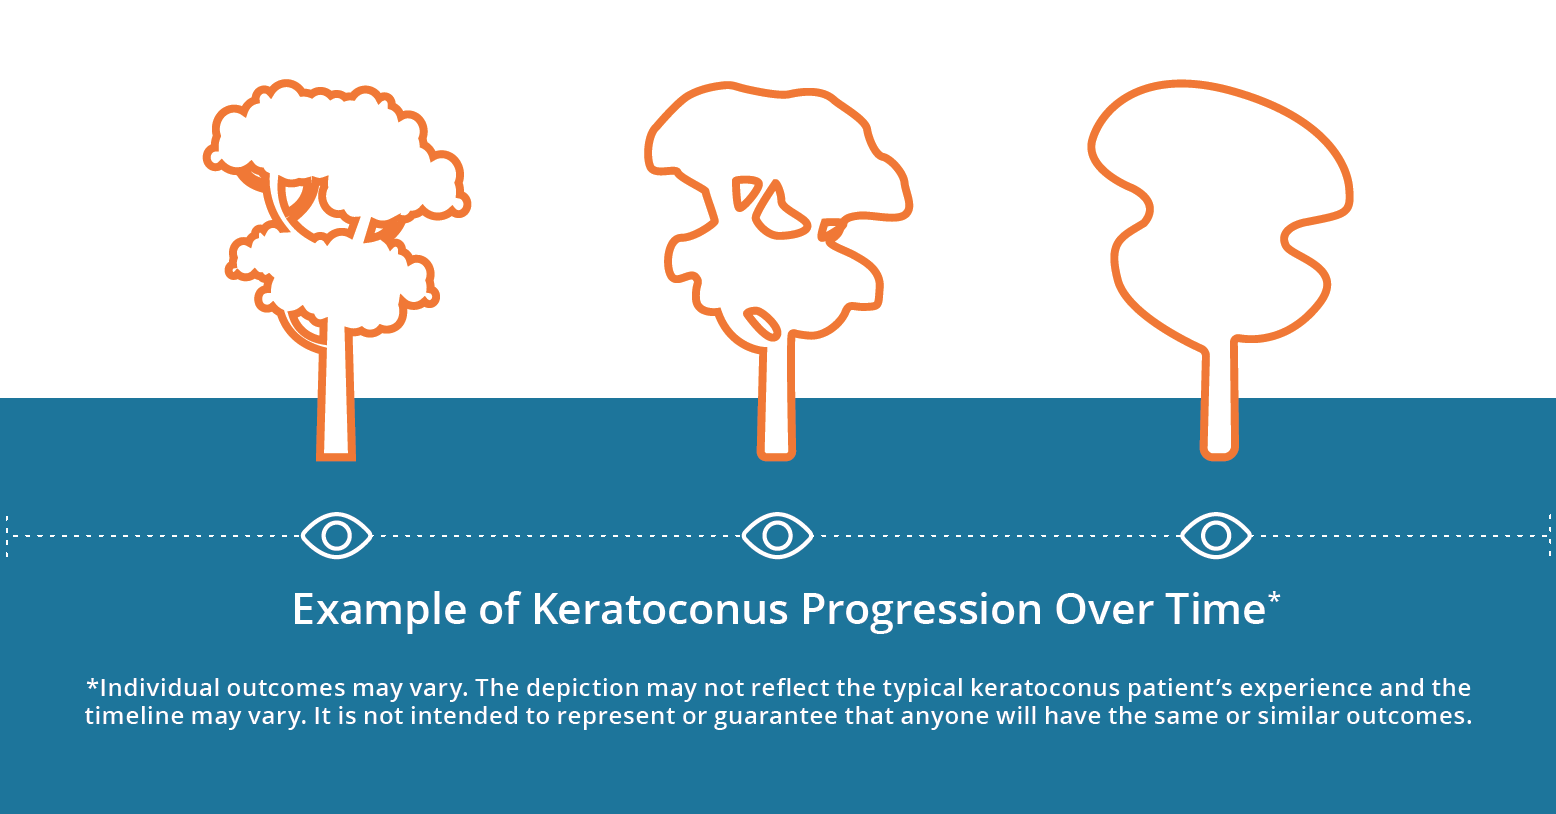 Keratoconus Early Detection